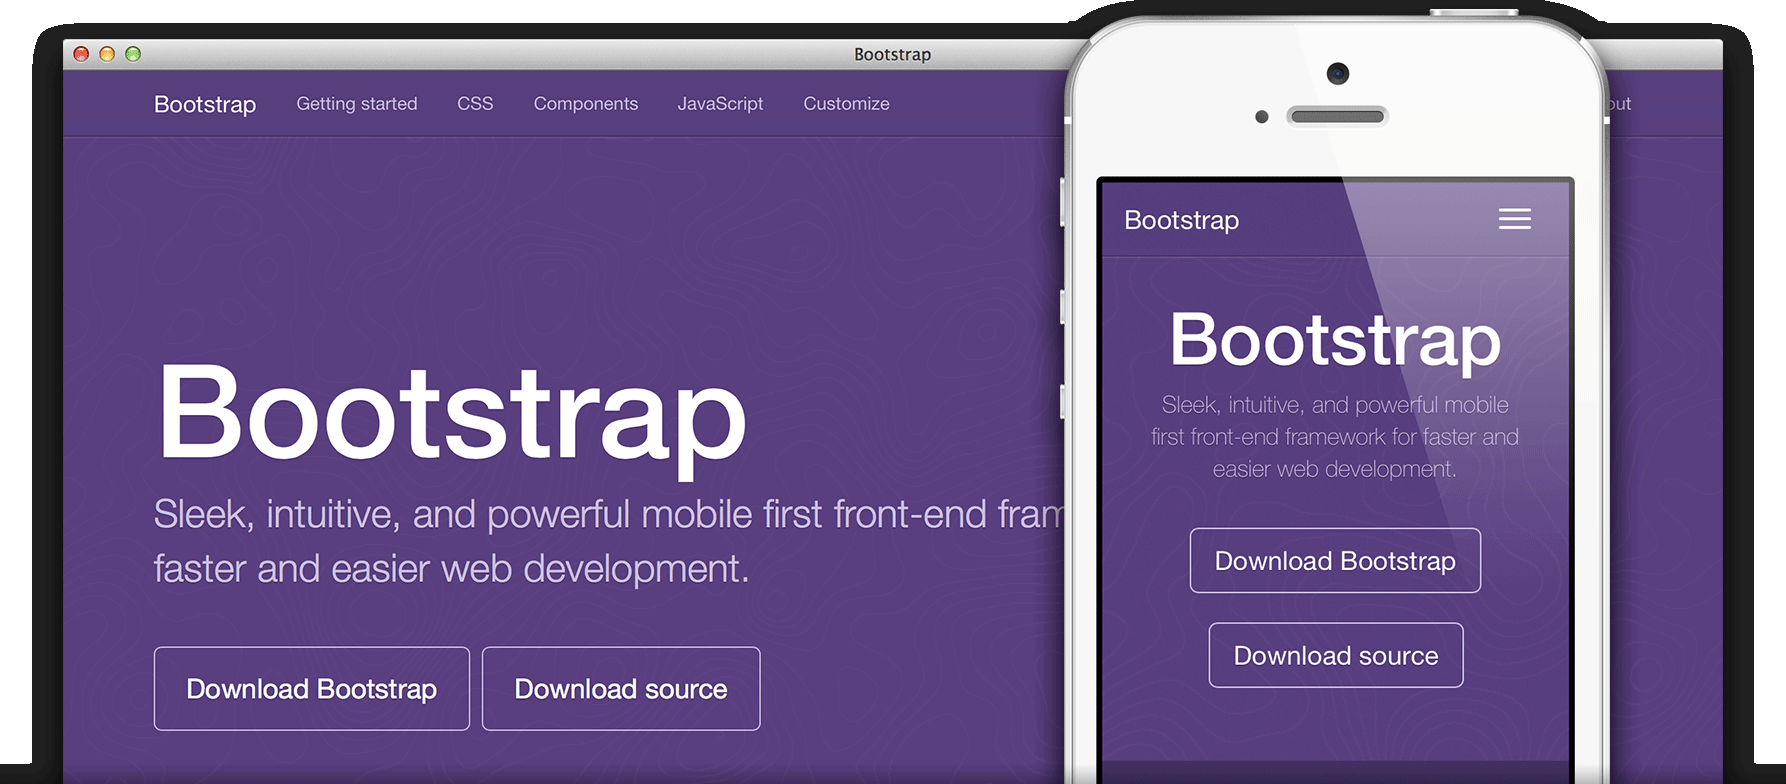 Bootstrap get. Bootstrap. Bootstrap (фреймворк). Bootstrap Framework. Картинка Bootstrap.